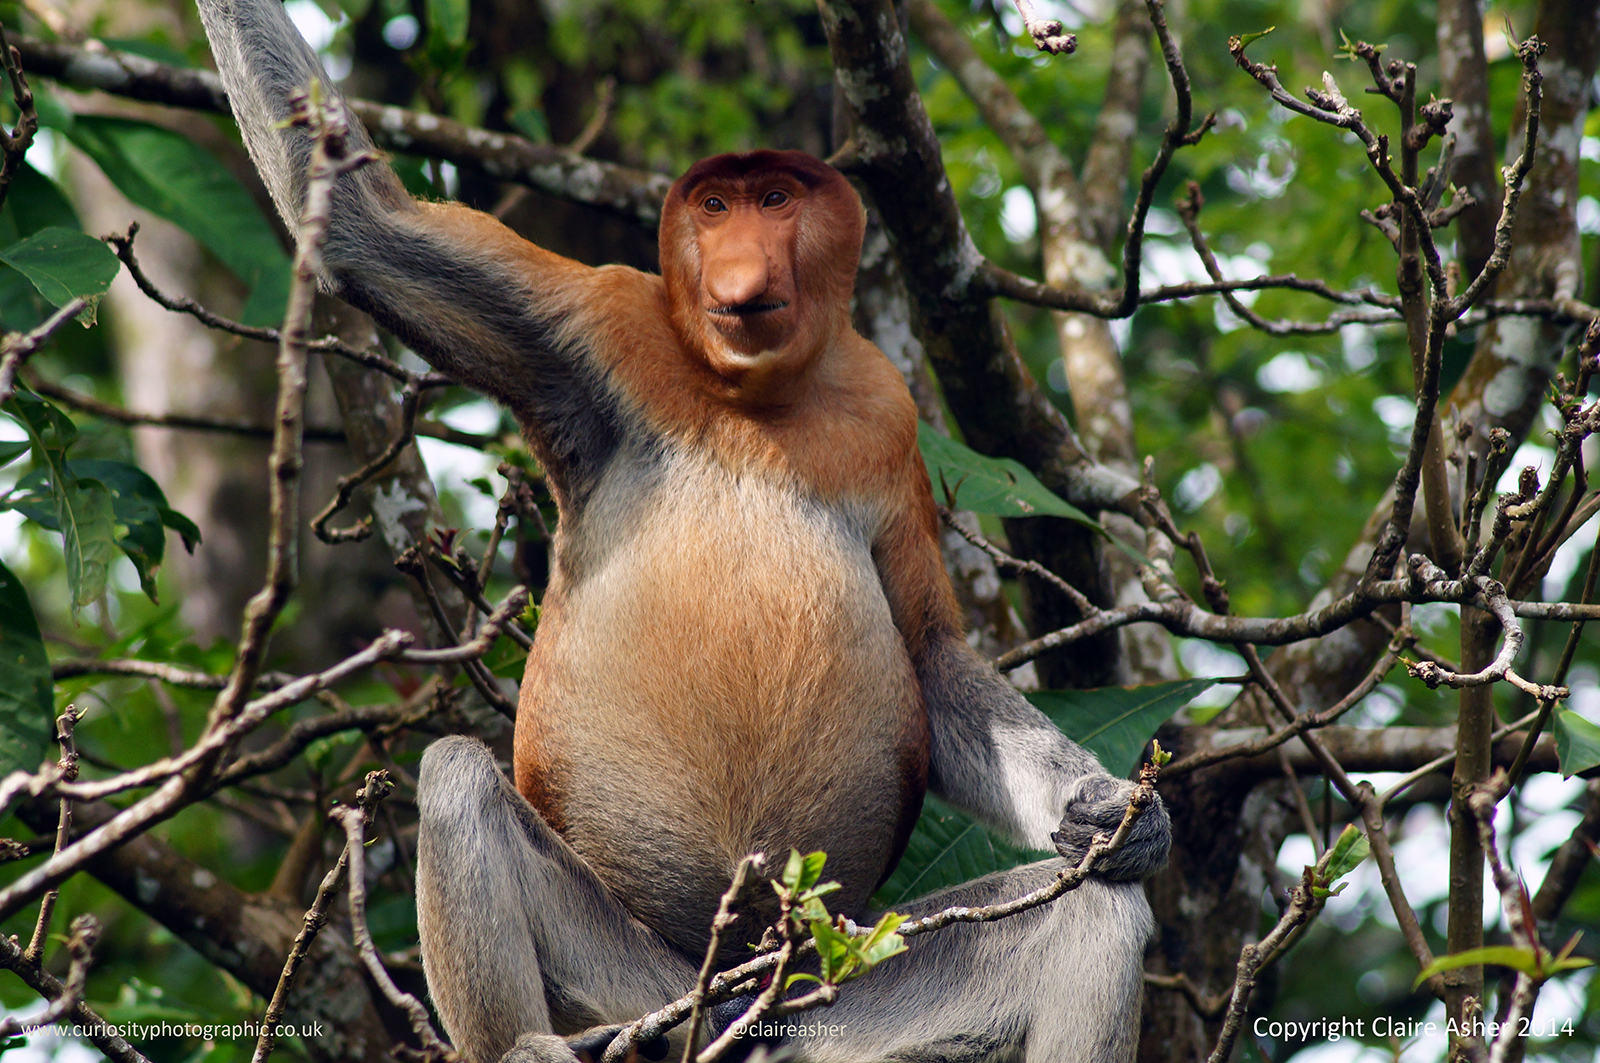 A male Proboscis monkey (Nasalis larvatus), photographed in Borneo, Malaysia in 2014.